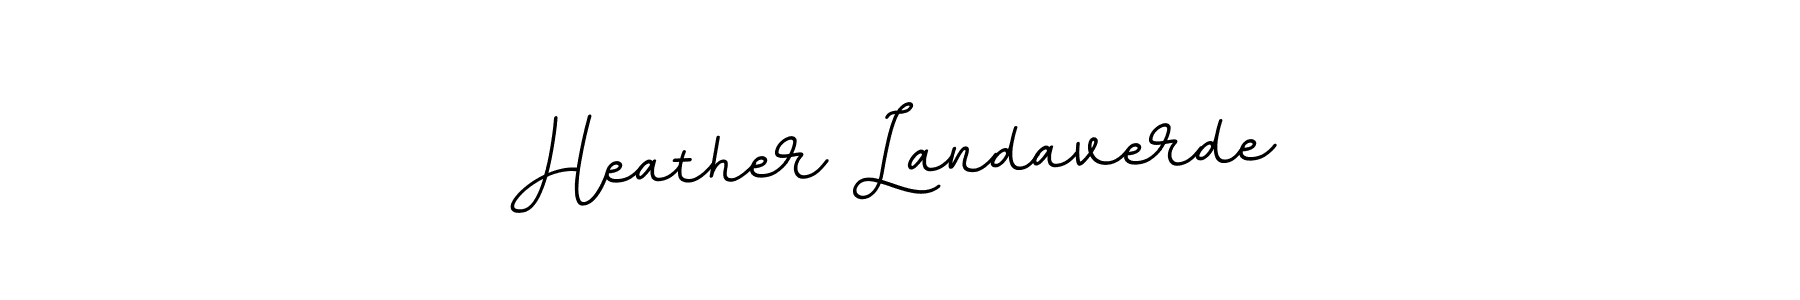 How to Draw Heather Landaverde signature style? BallpointsItalic-DORy9 is a latest design signature styles for name Heather Landaverde. Heather Landaverde signature style 11 images and pictures png